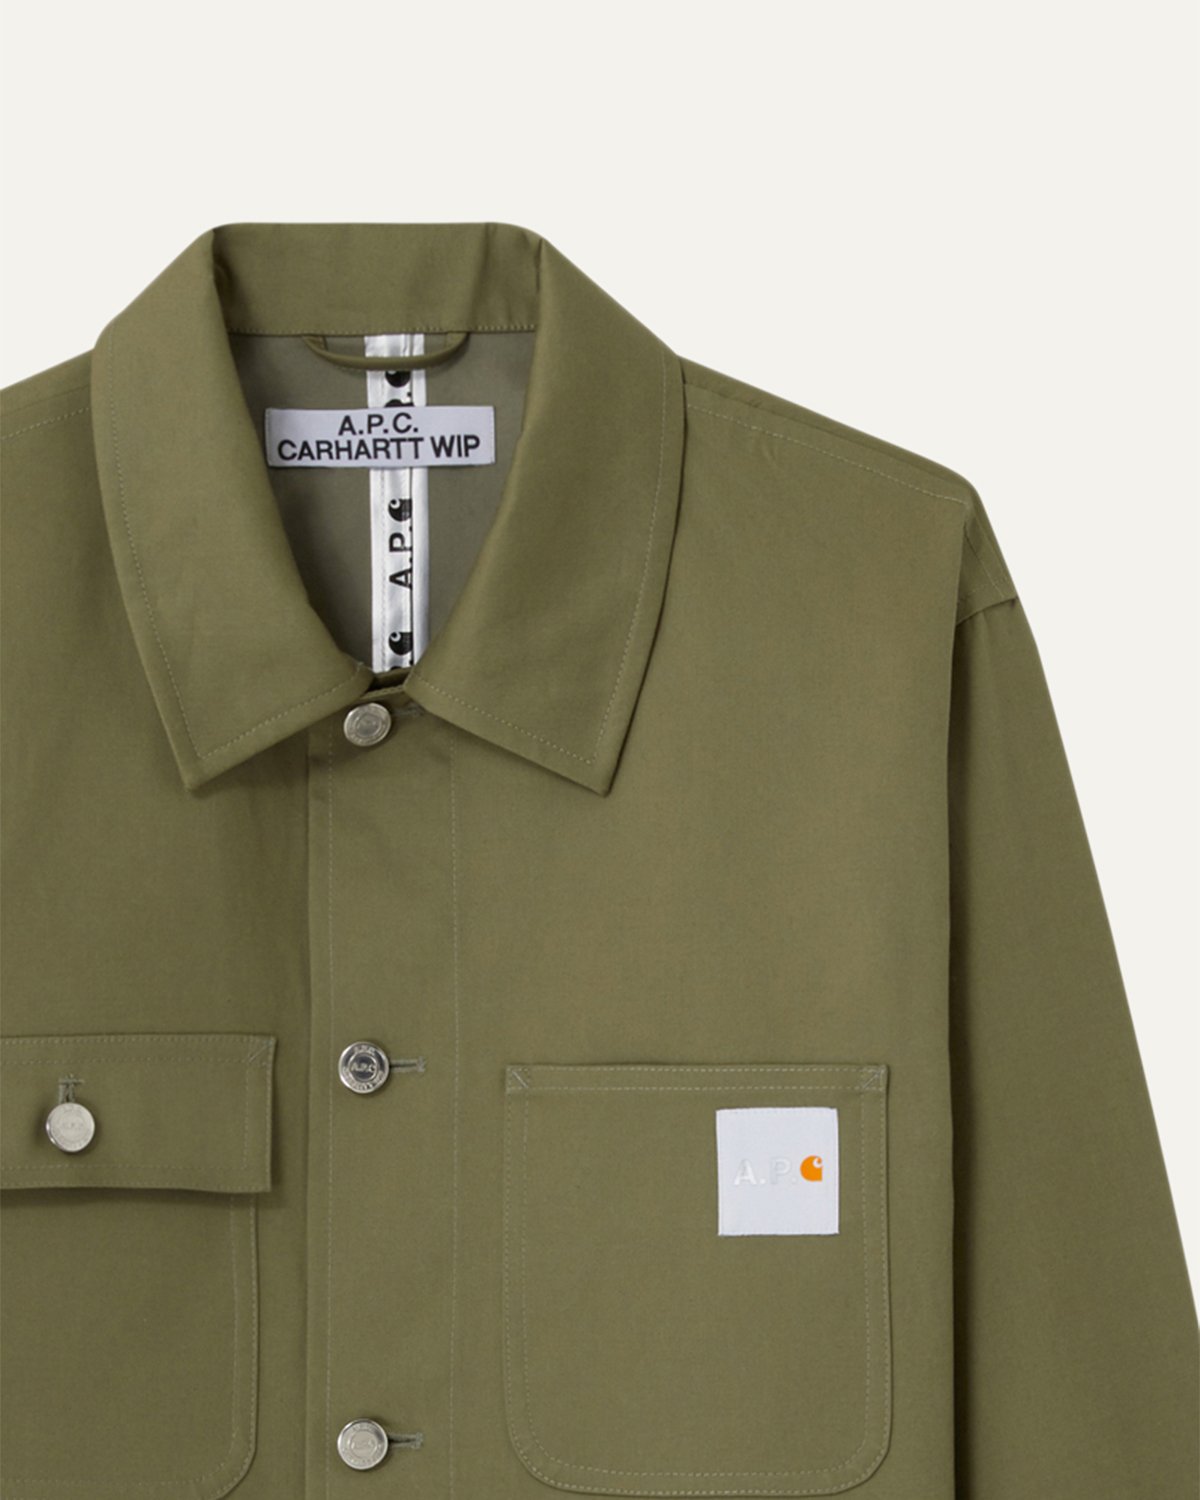 A.P.C. x Carhartt WIP - Work Jacket - Outerwear - Green - Image 2